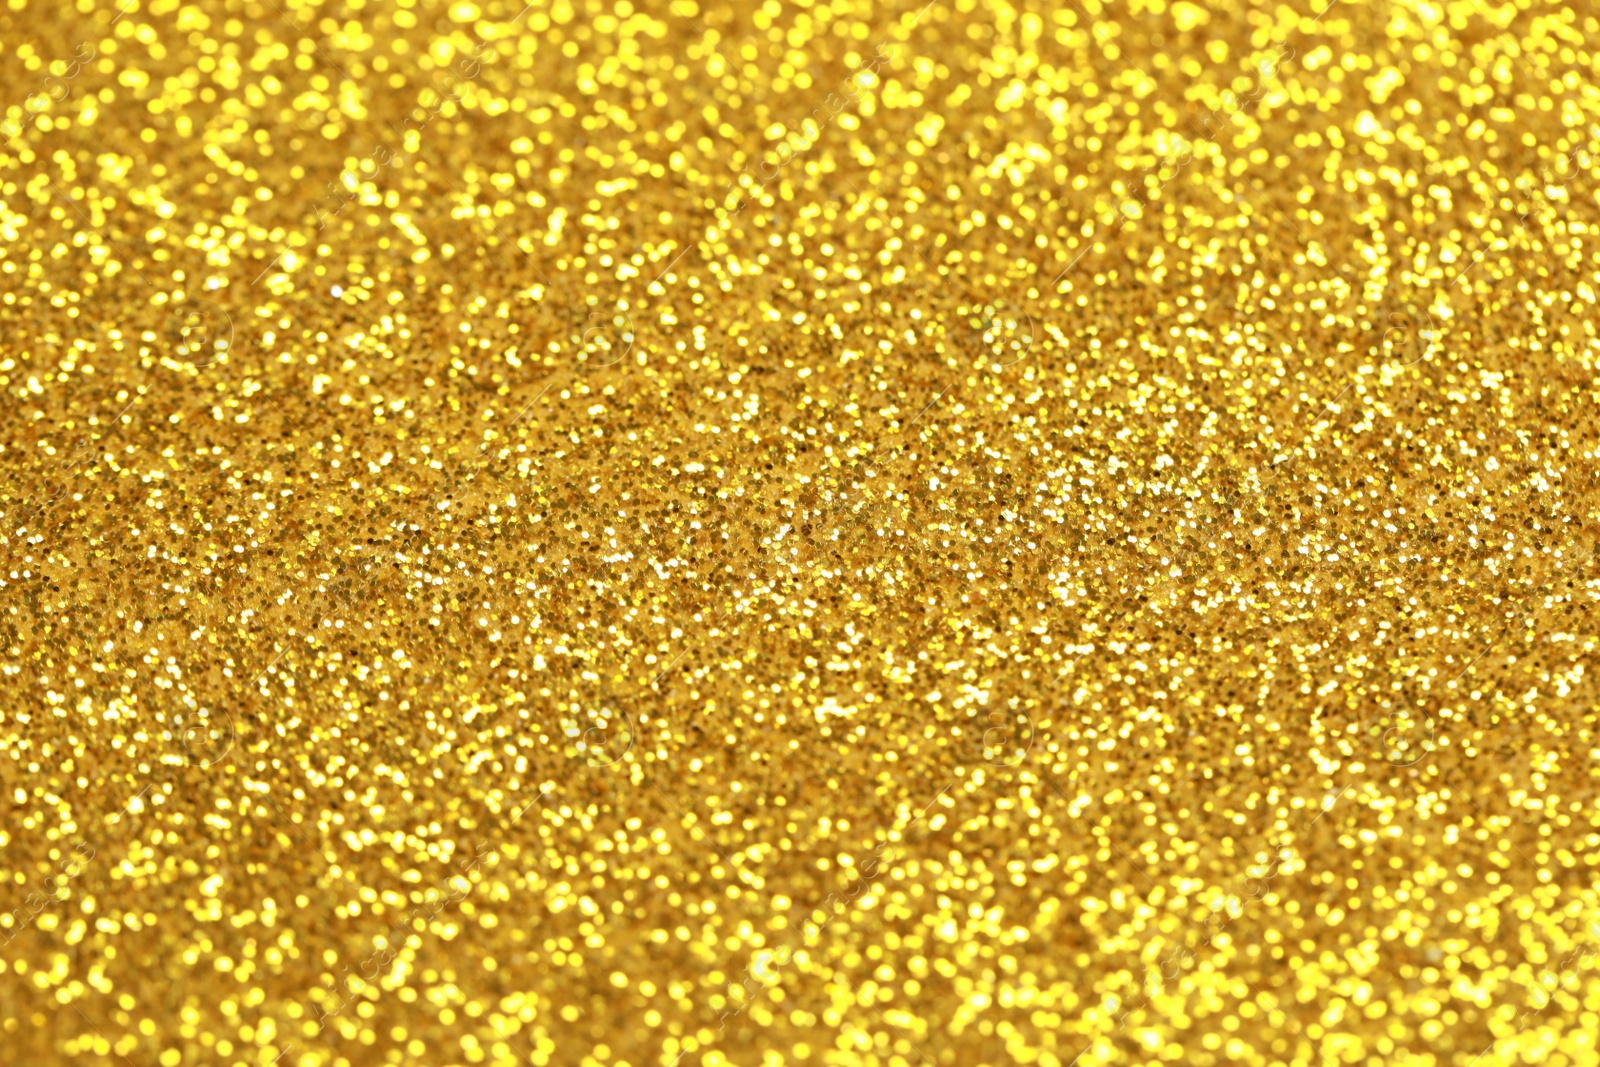 Photo of Beautiful golden shiny glitter as background, closeup